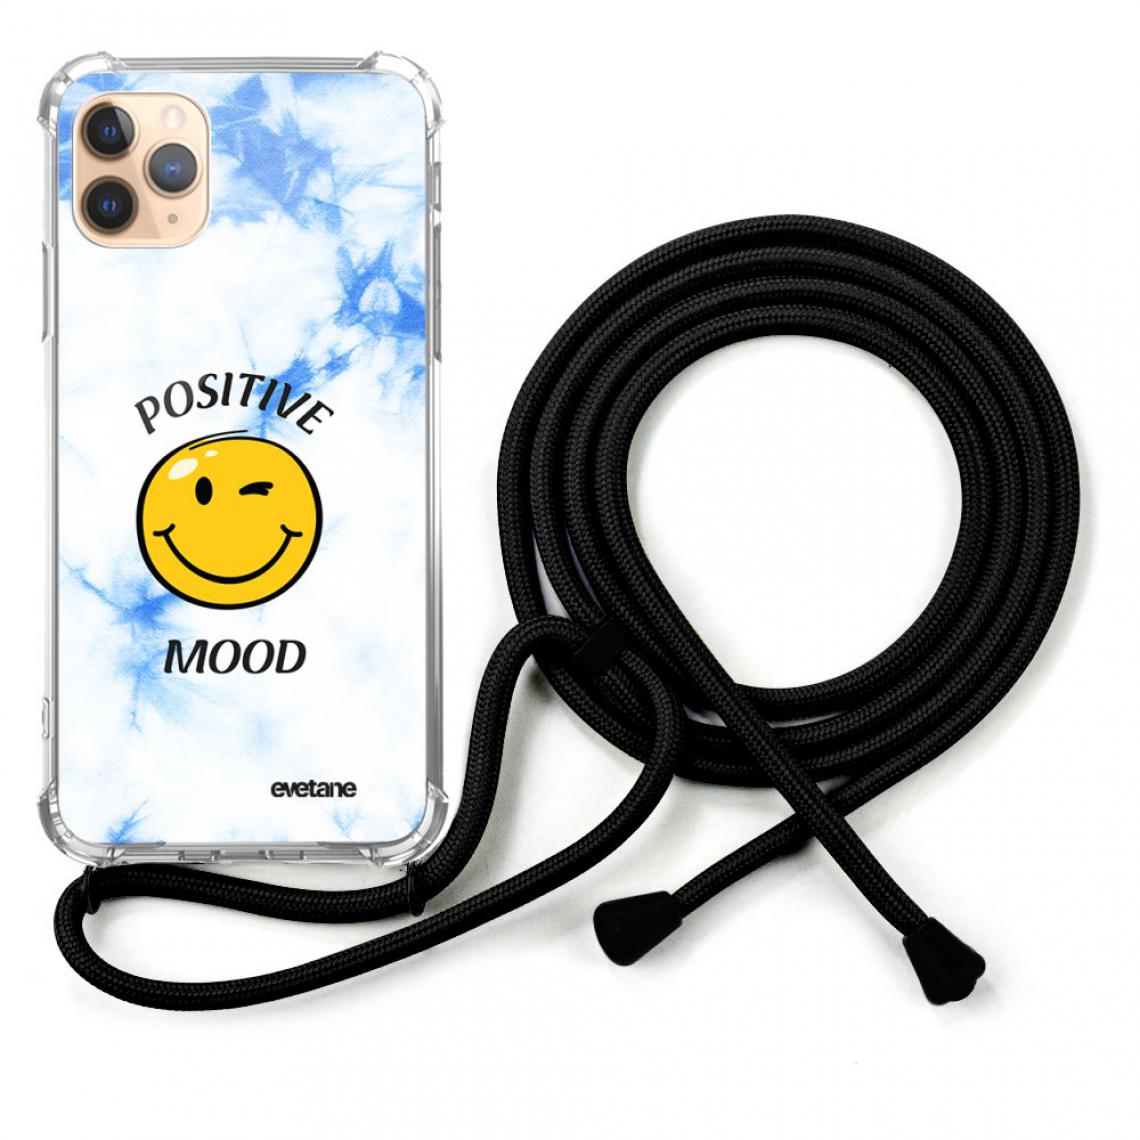 Evetane - Coque iPhone 11 Pro coque avec cordon transparente Positive mood - Coque, étui smartphone